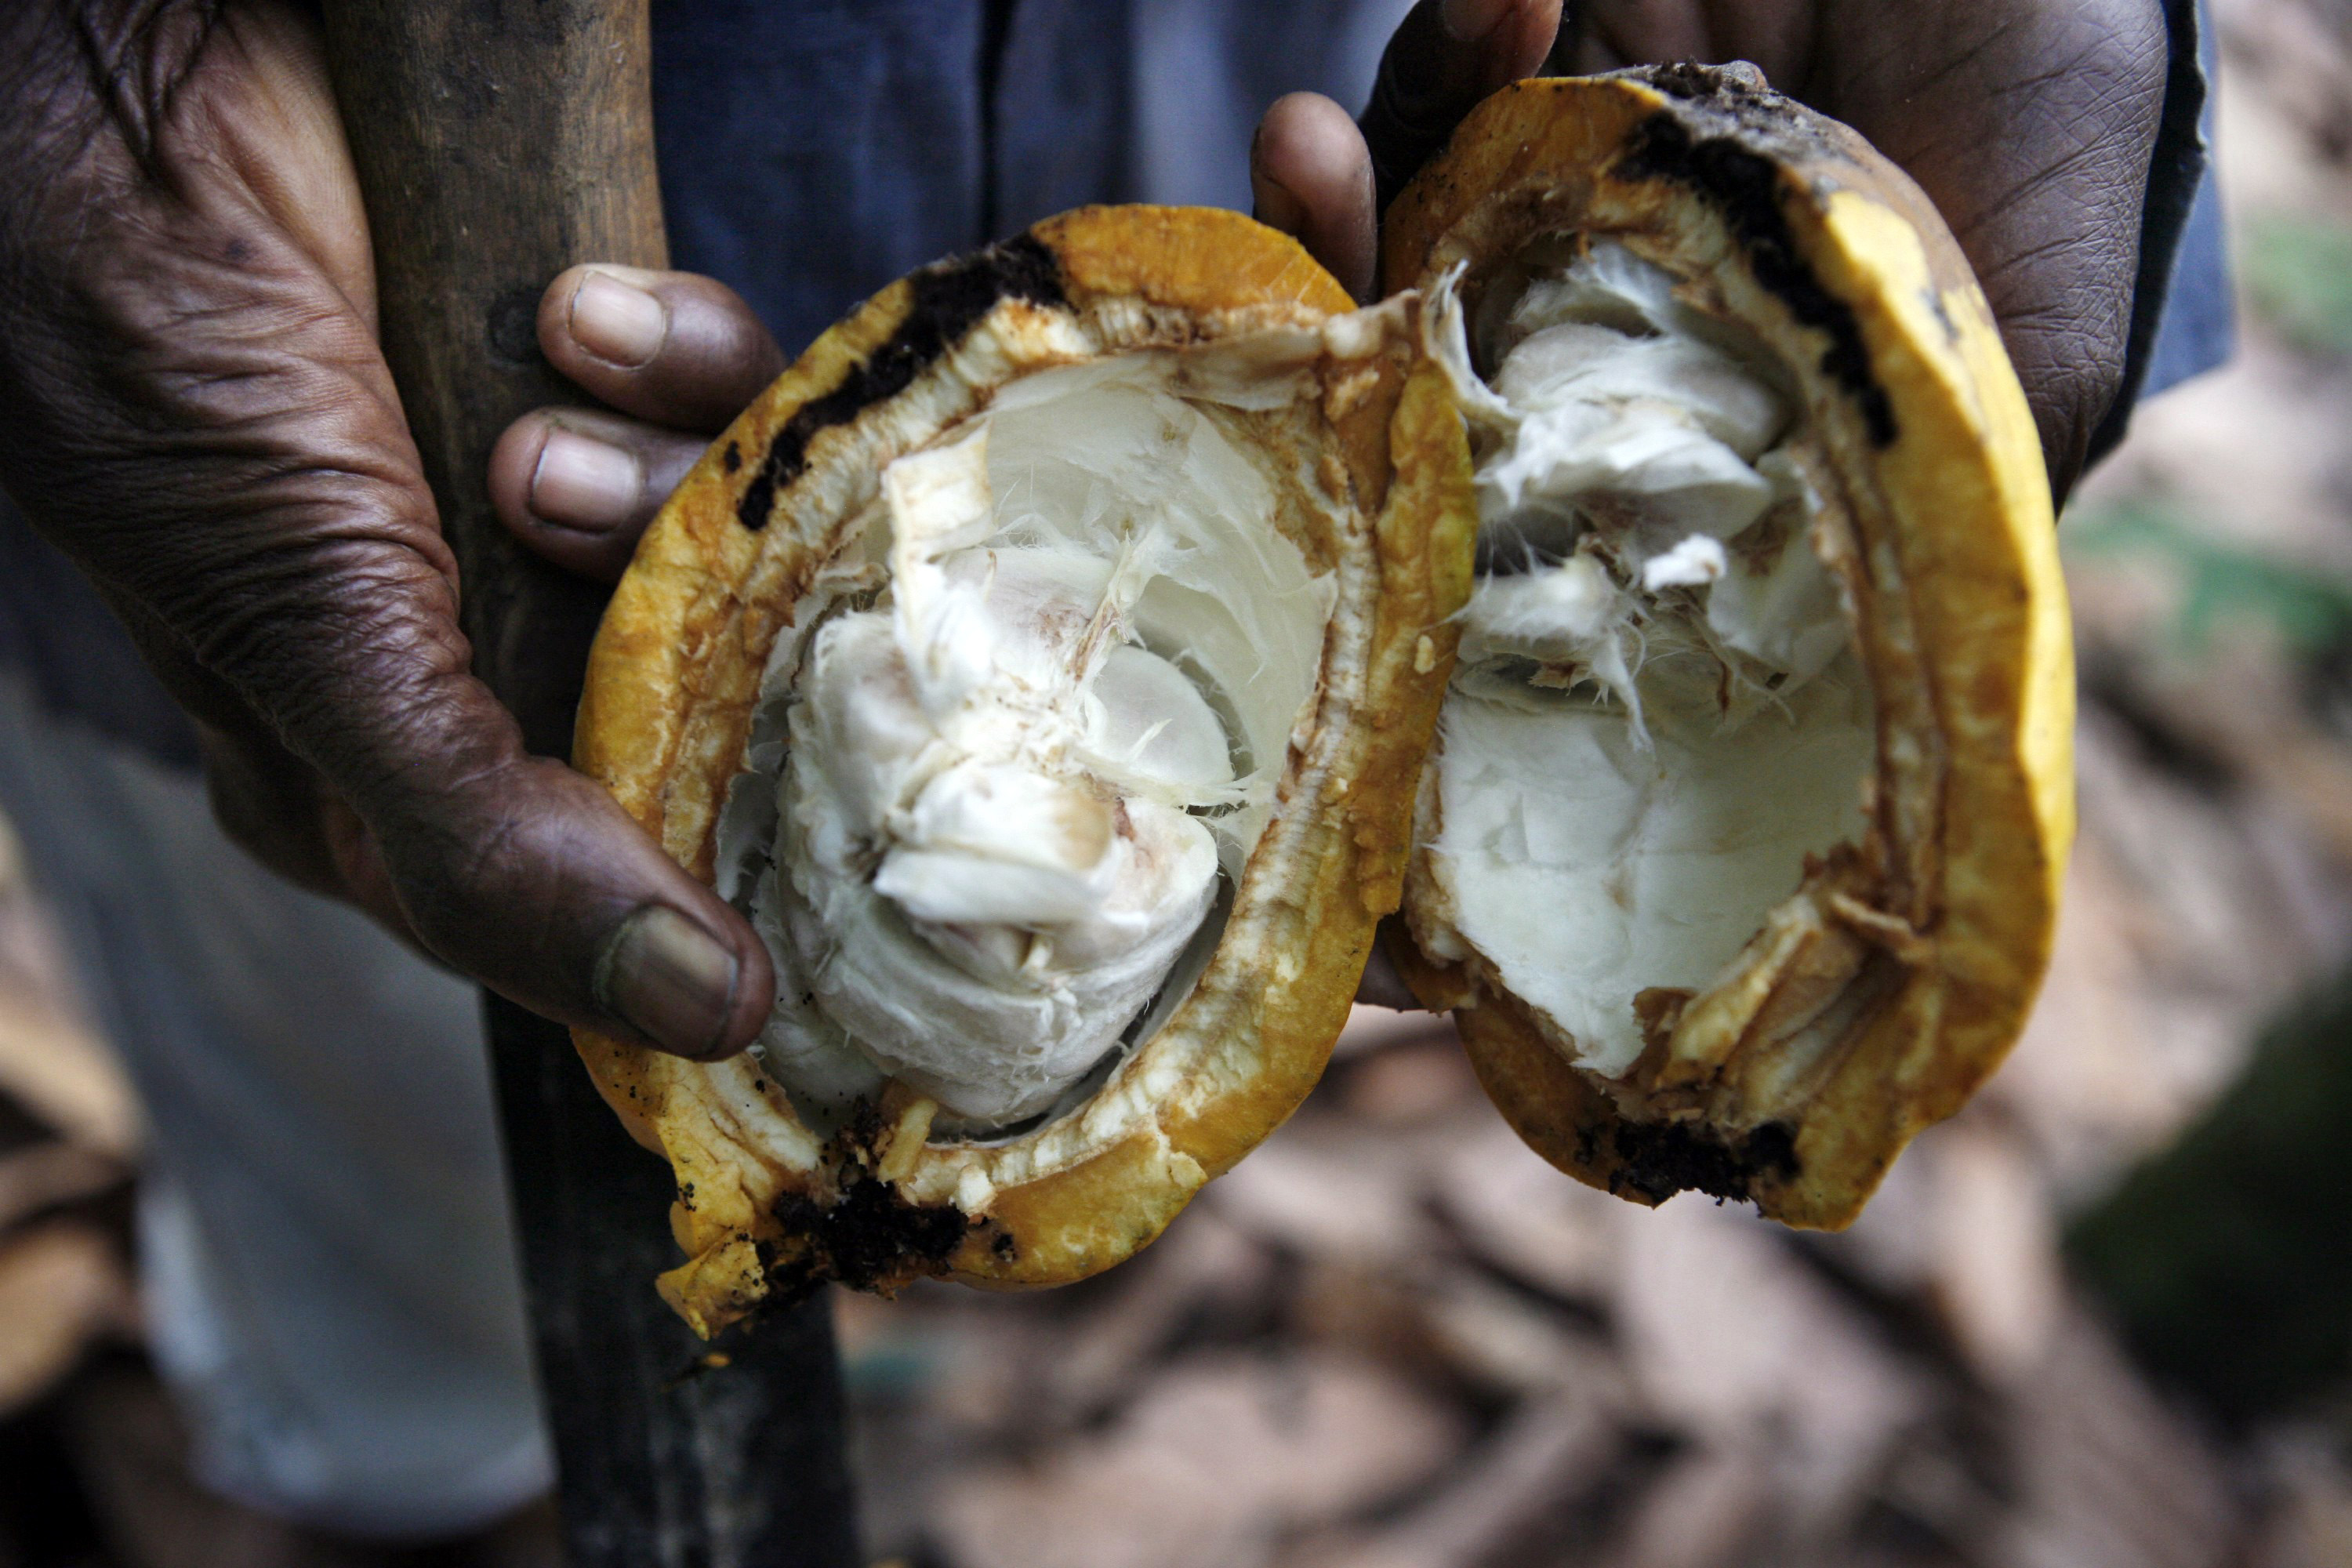 A farmer holds an open, ripe cocoa pod on a farm outside of